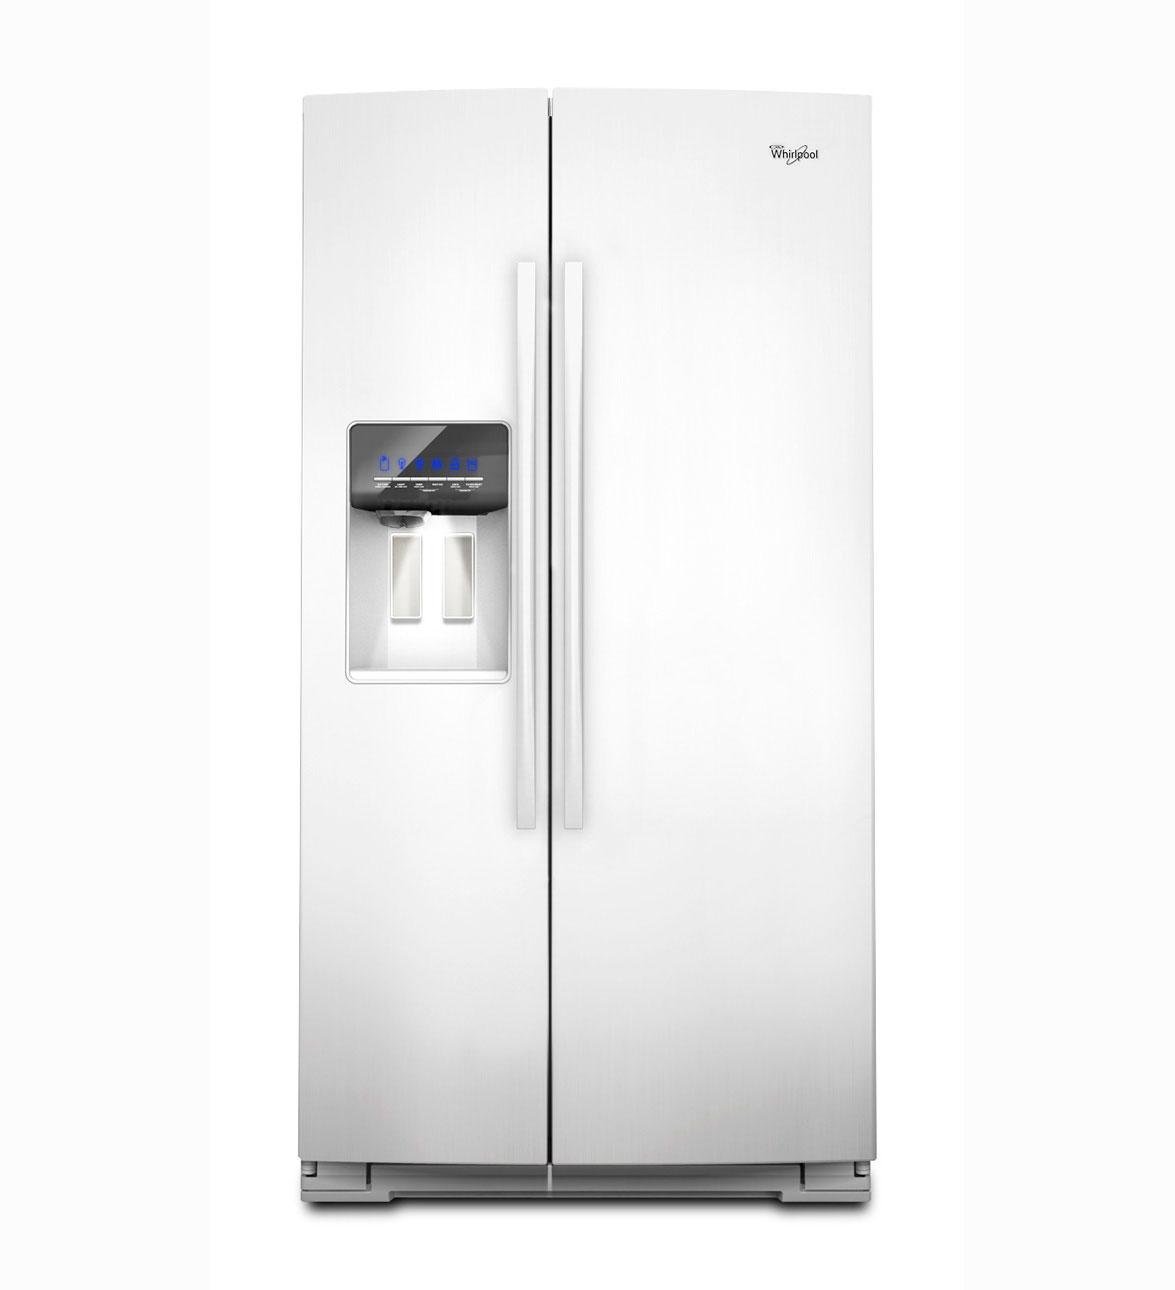 5 Best Counter Depth Refrigerator 